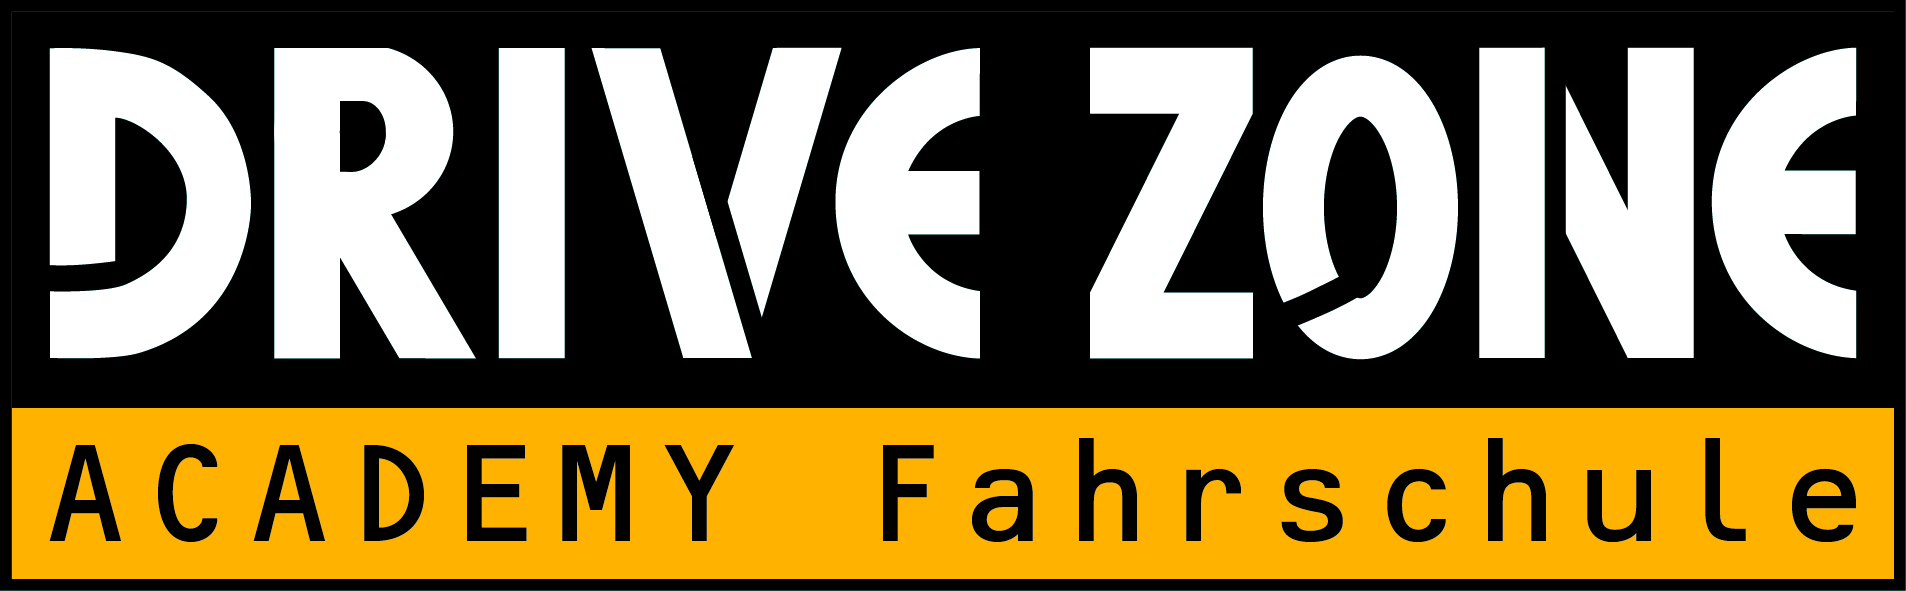 ACADEMY Fahrschule Drive Zone GmbH